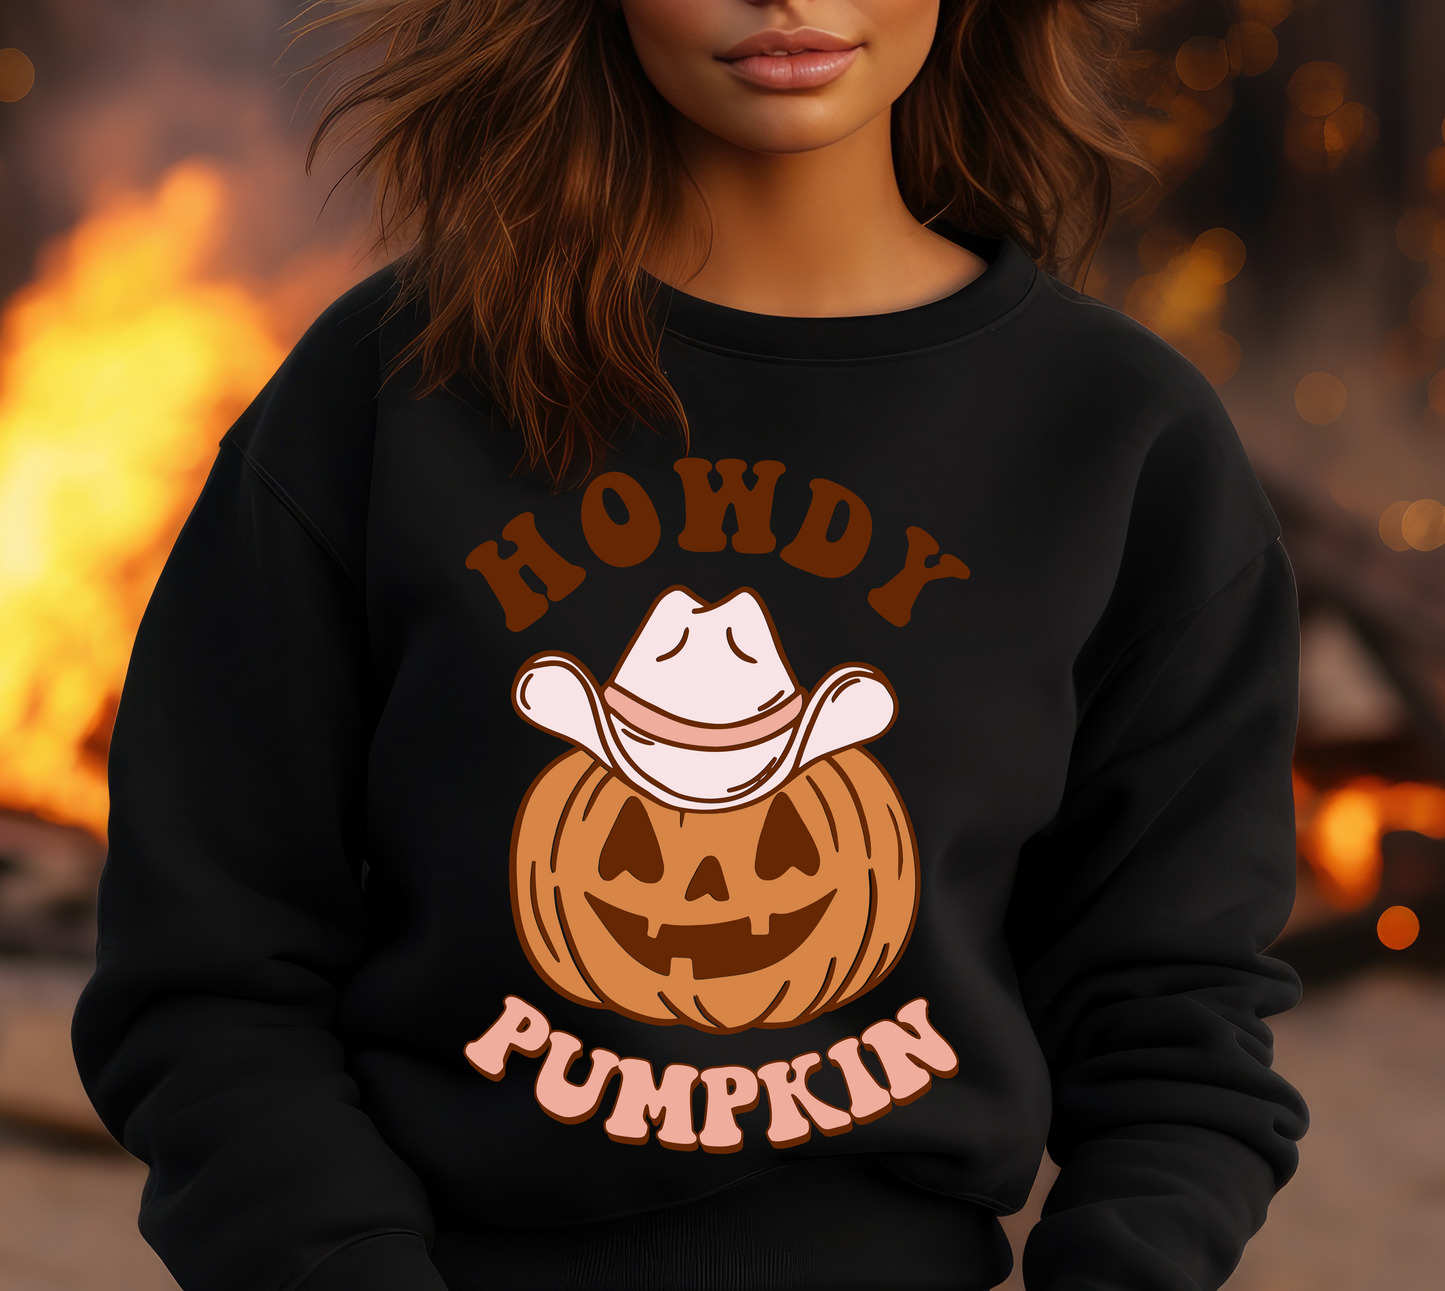 Howdy Pumpkin - Full Color Transfer